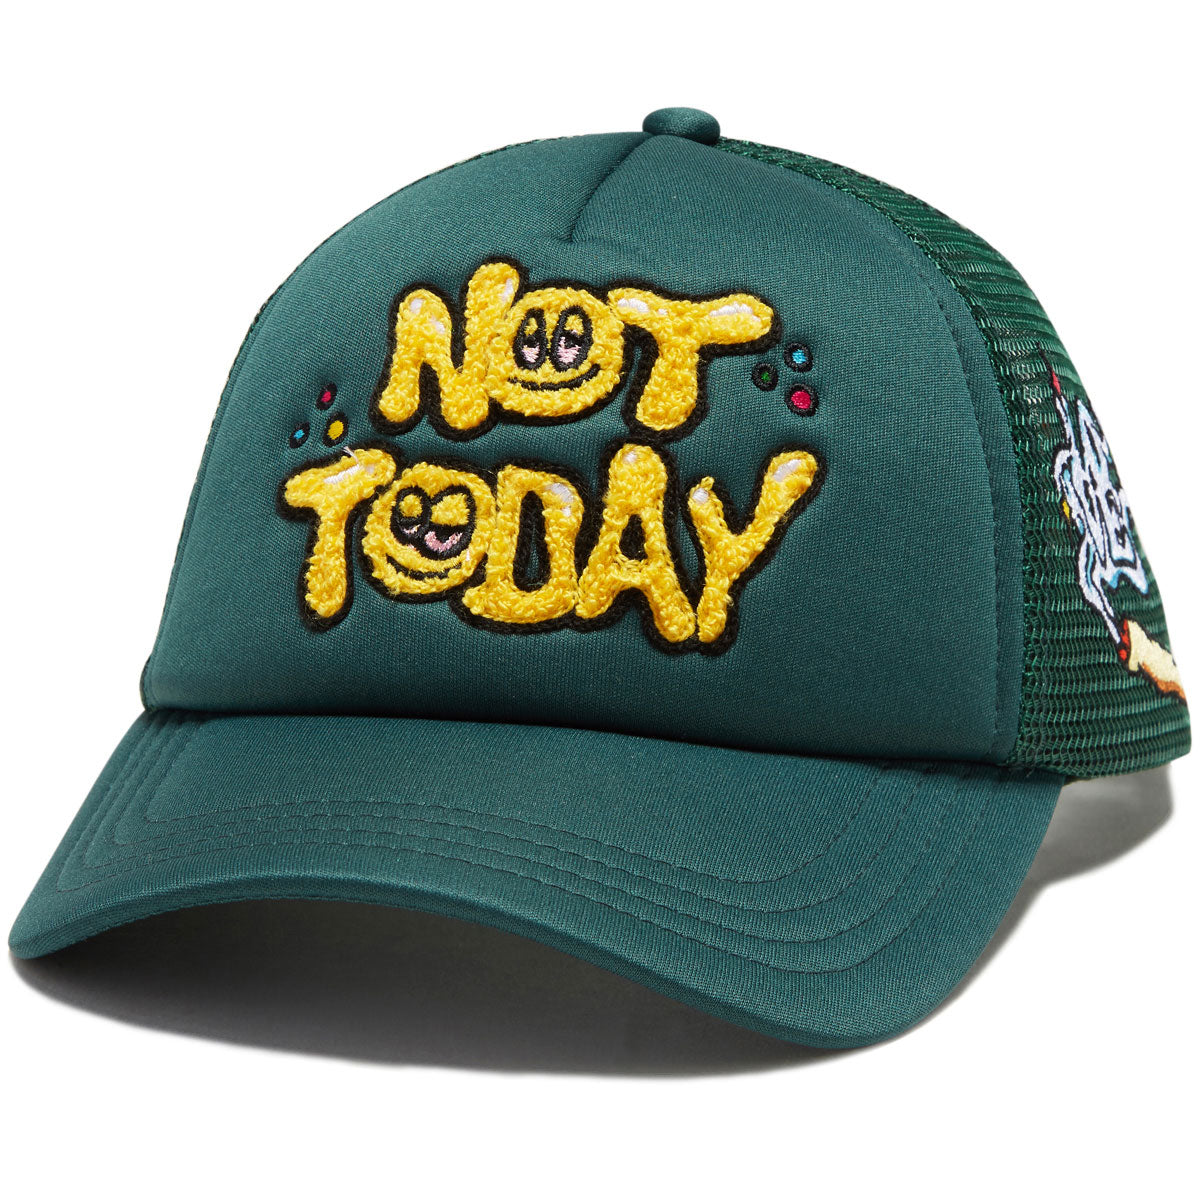 DGK Not Today Trucker Hat - Green image 1